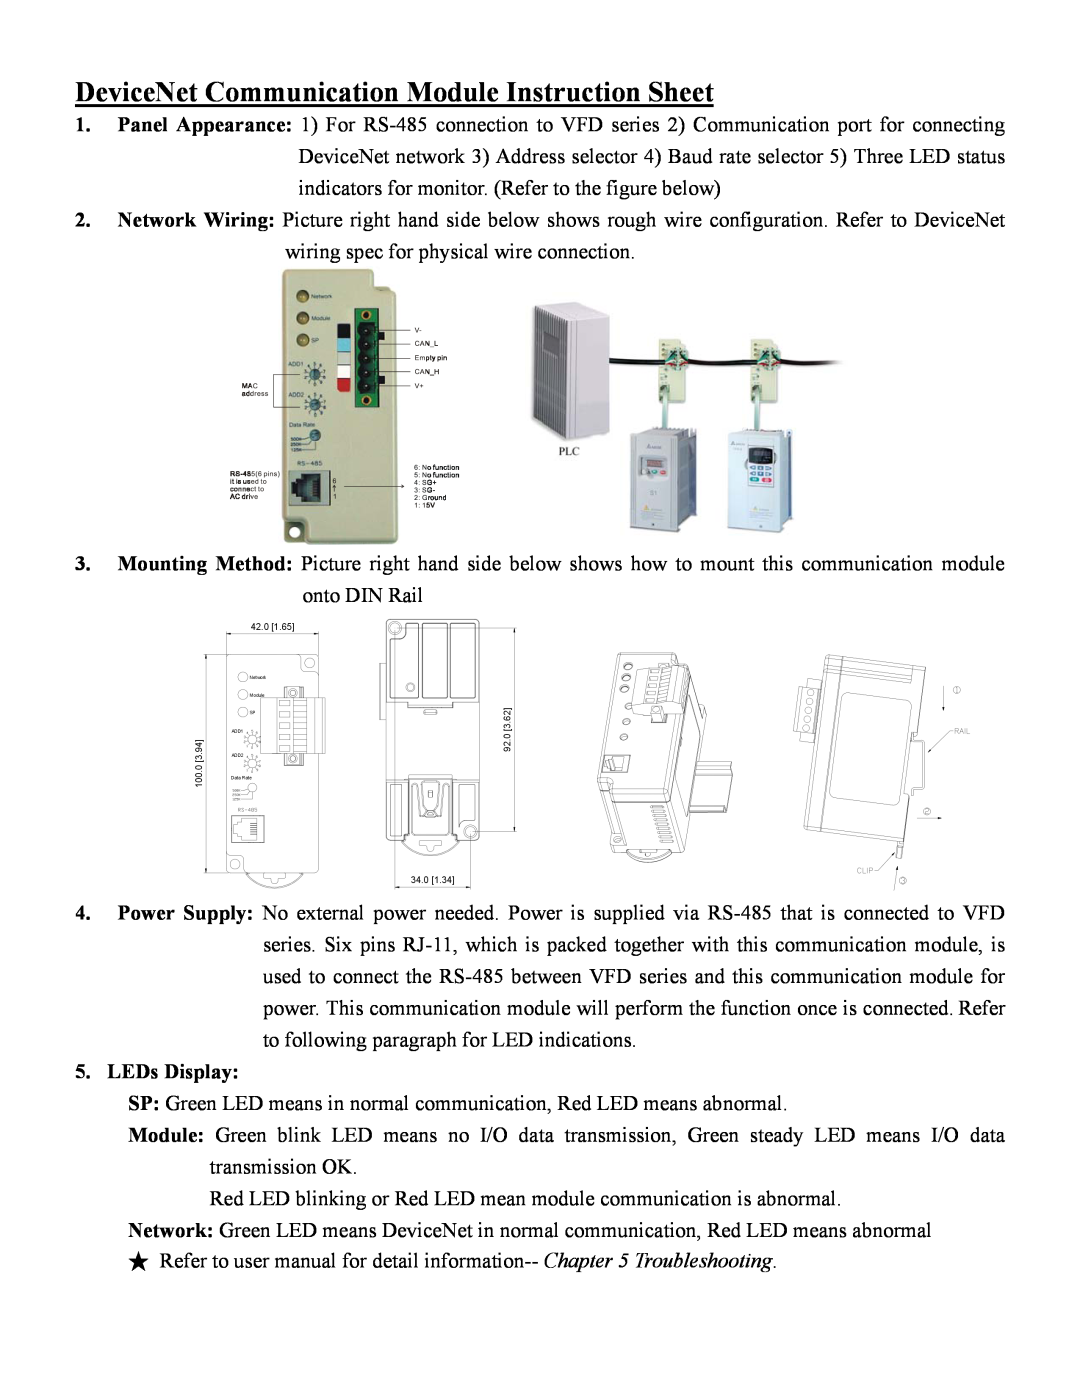 Delta Electronics DN02 instruction sheet DeviceNet Communication Module Instruction Sheet, LEDs Display 